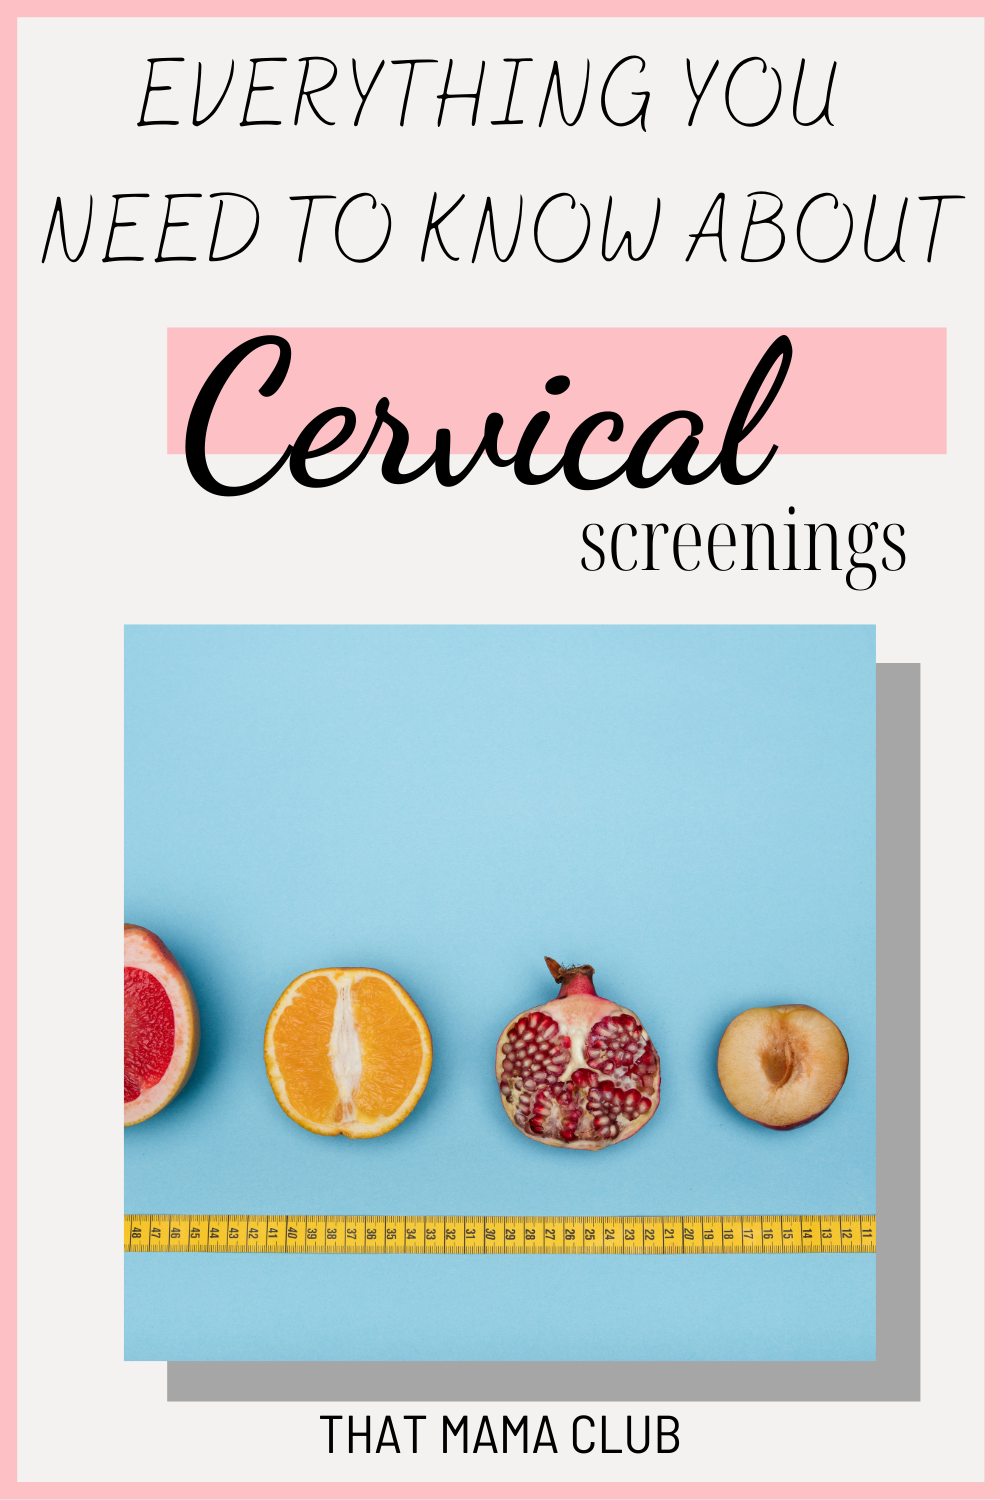 cervical screening